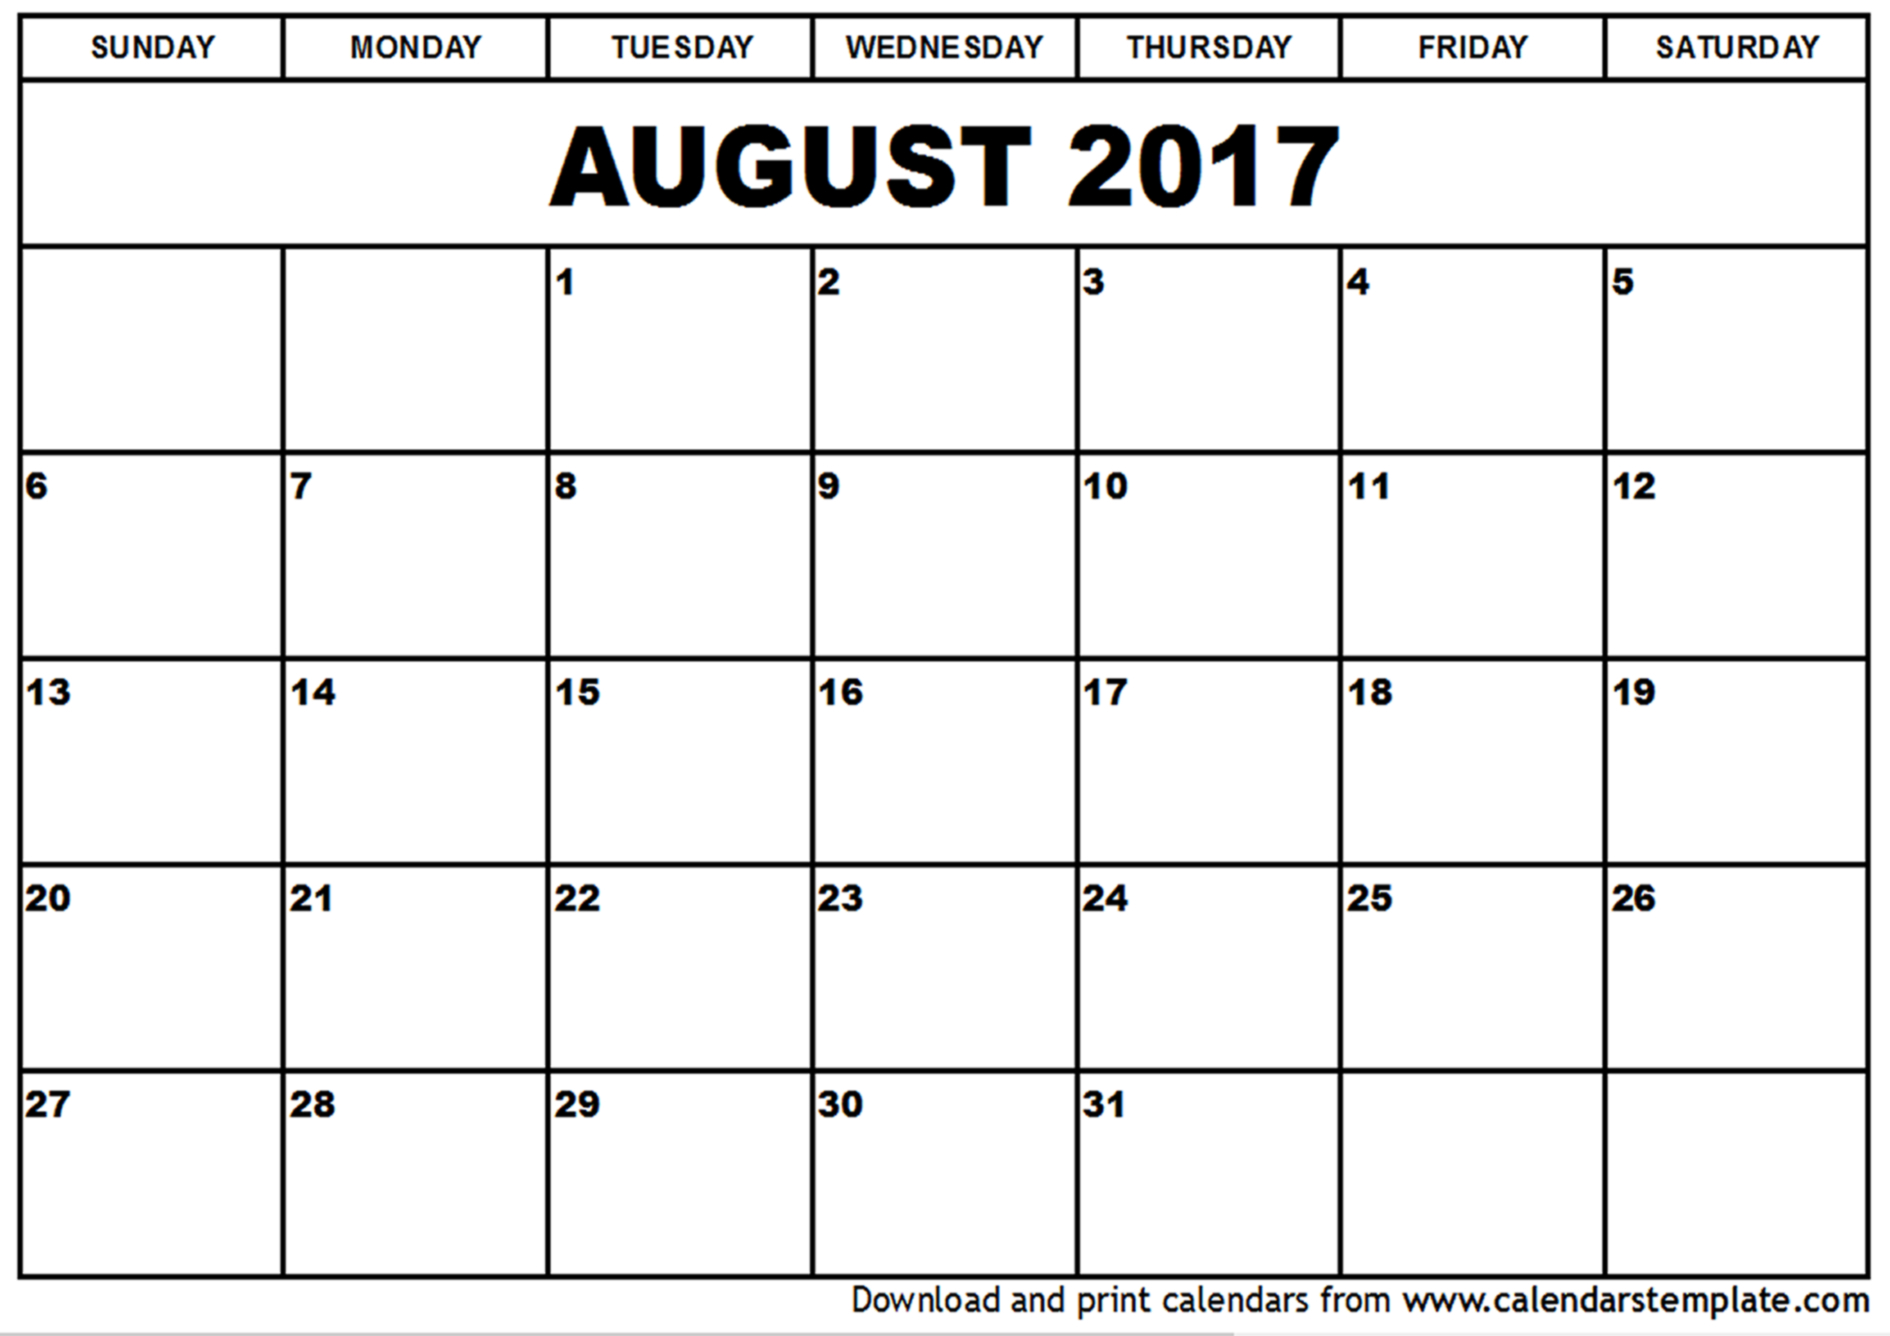 calendar-2017-50-important-calendar-templates-of-2017-pdf-jpg